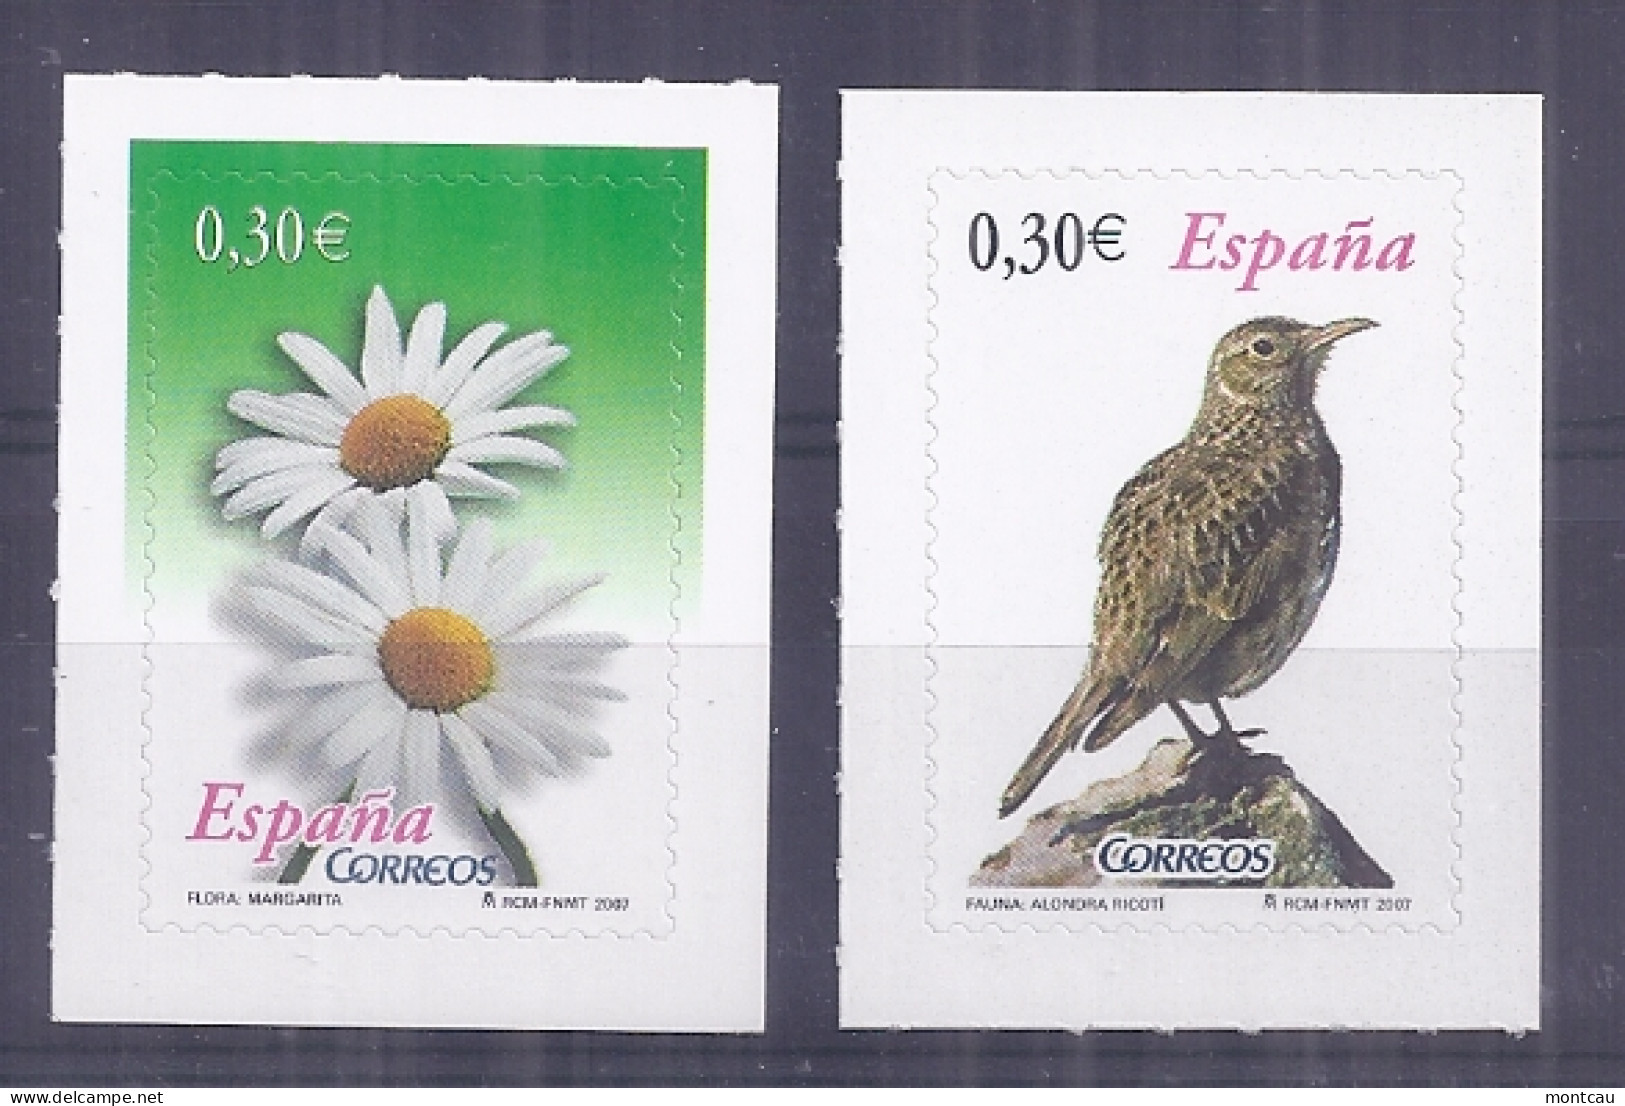 Spain 2007. Flora Y Fauna Ed 4304-05 (**) - Unused Stamps